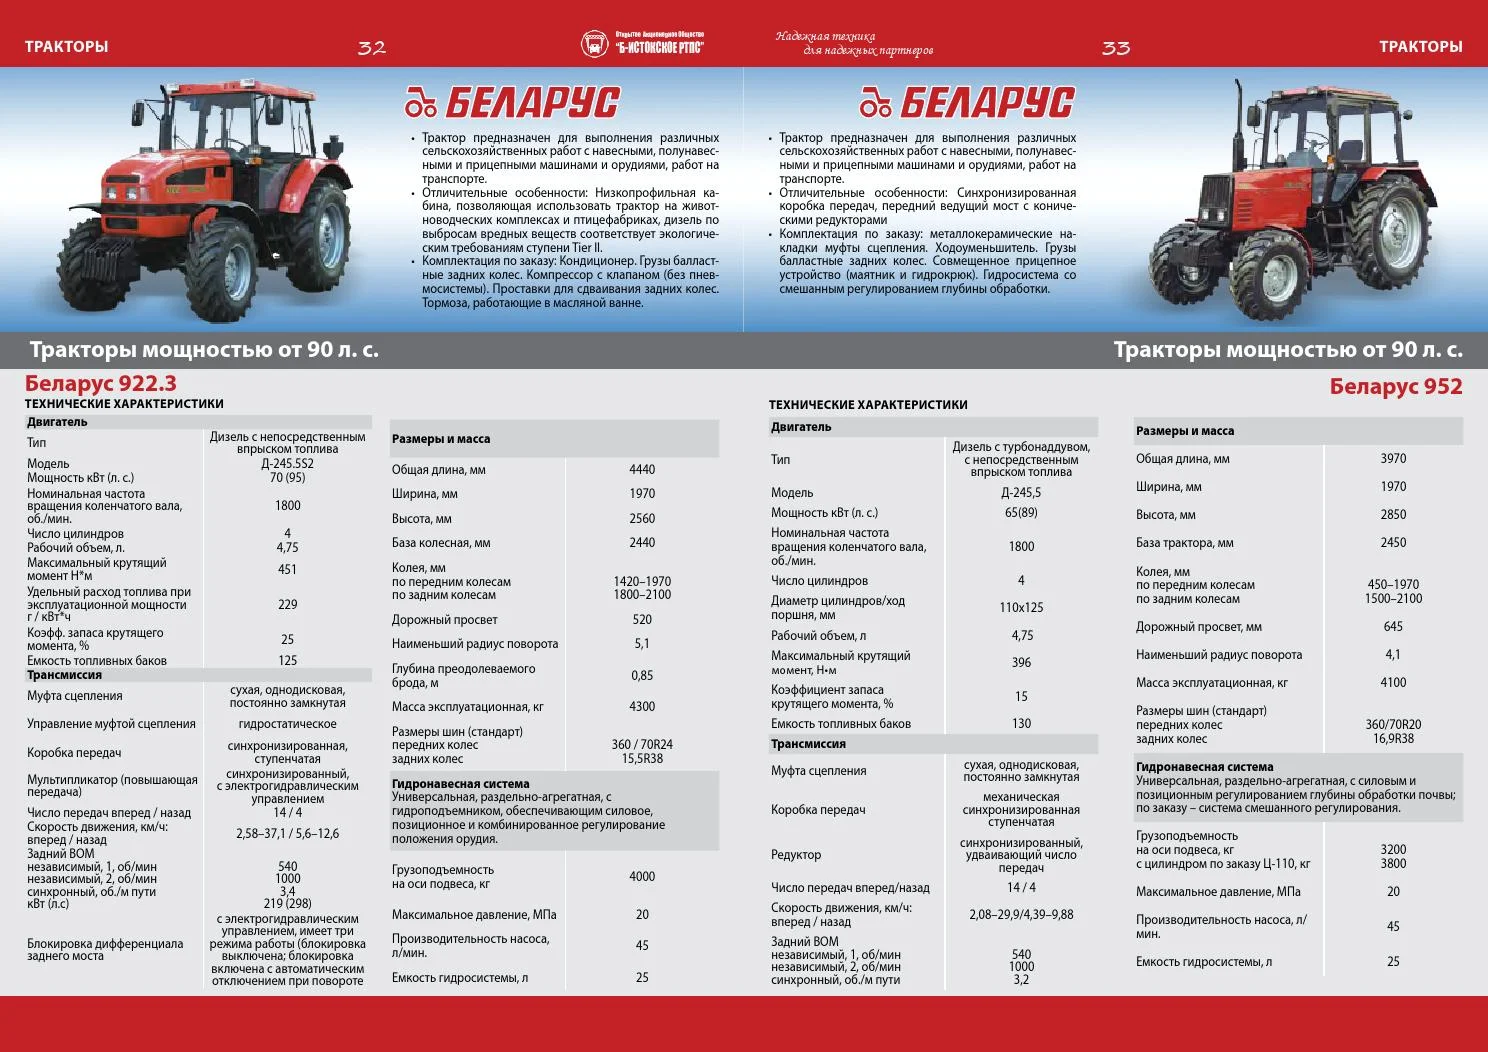 Трактор мтз-82: технические характеристики, устройство двигателя